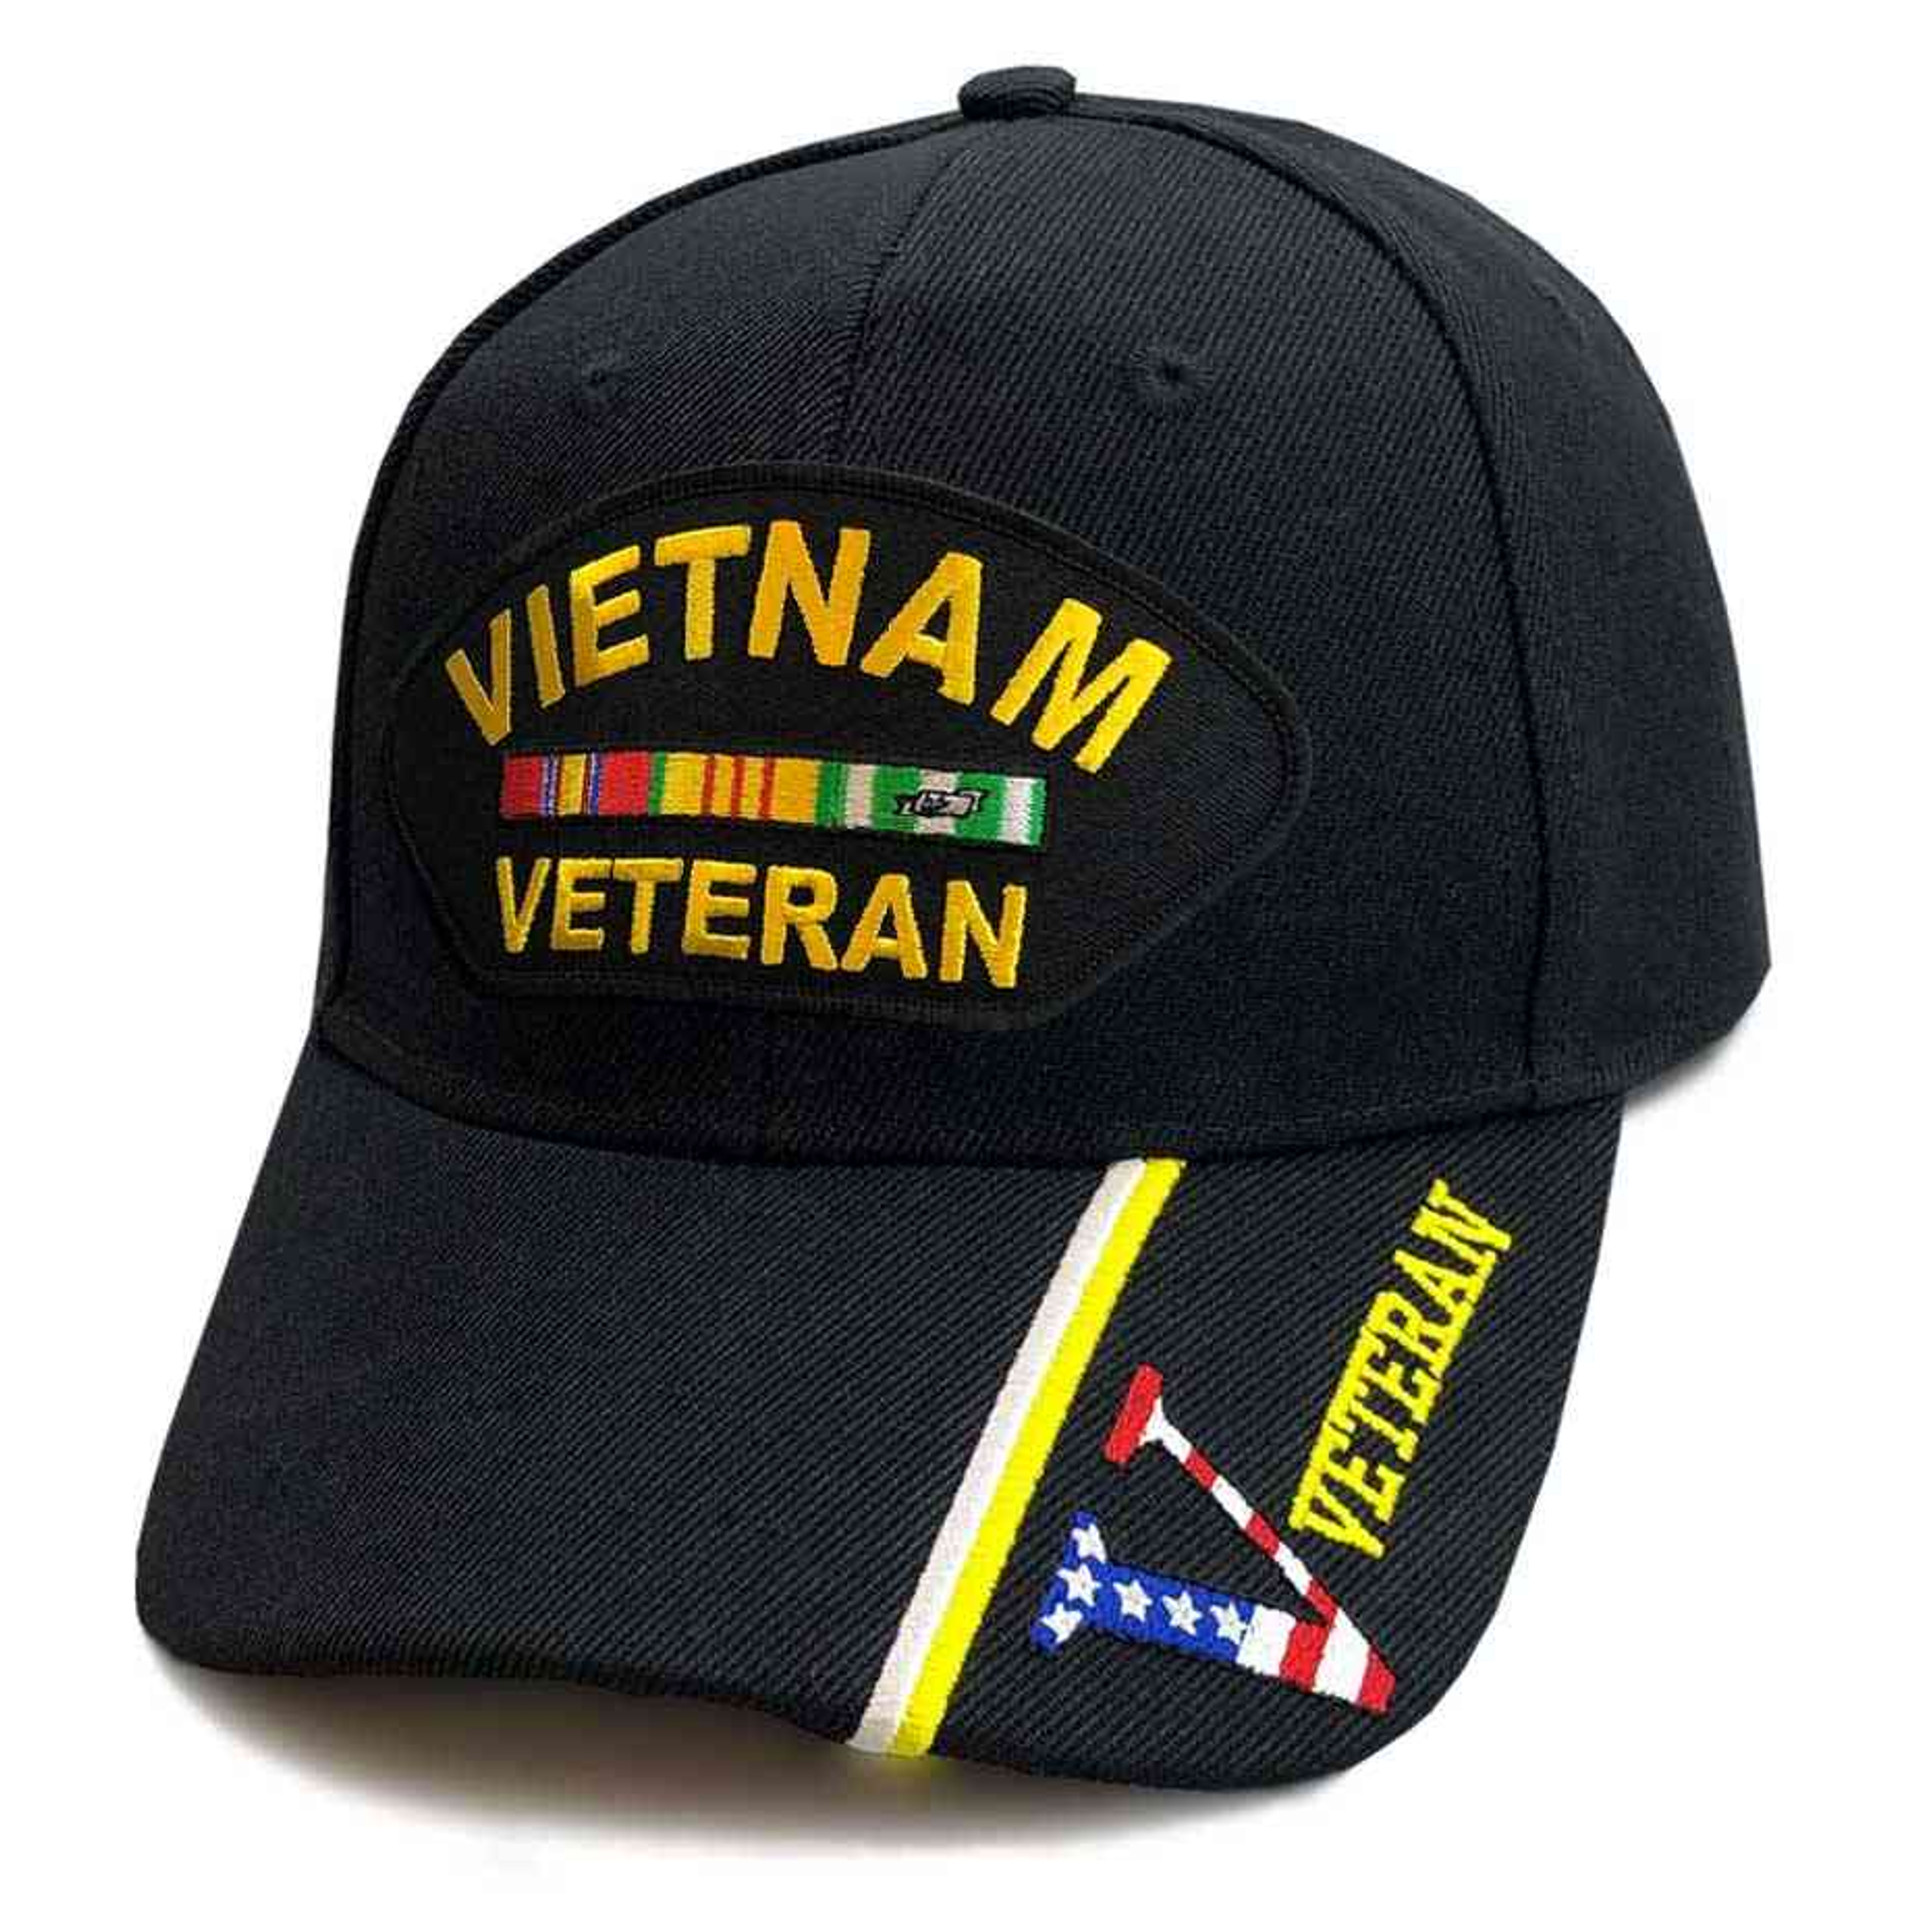 Vietnam Veteran Hat with Ribbons and V Veteran Graphic